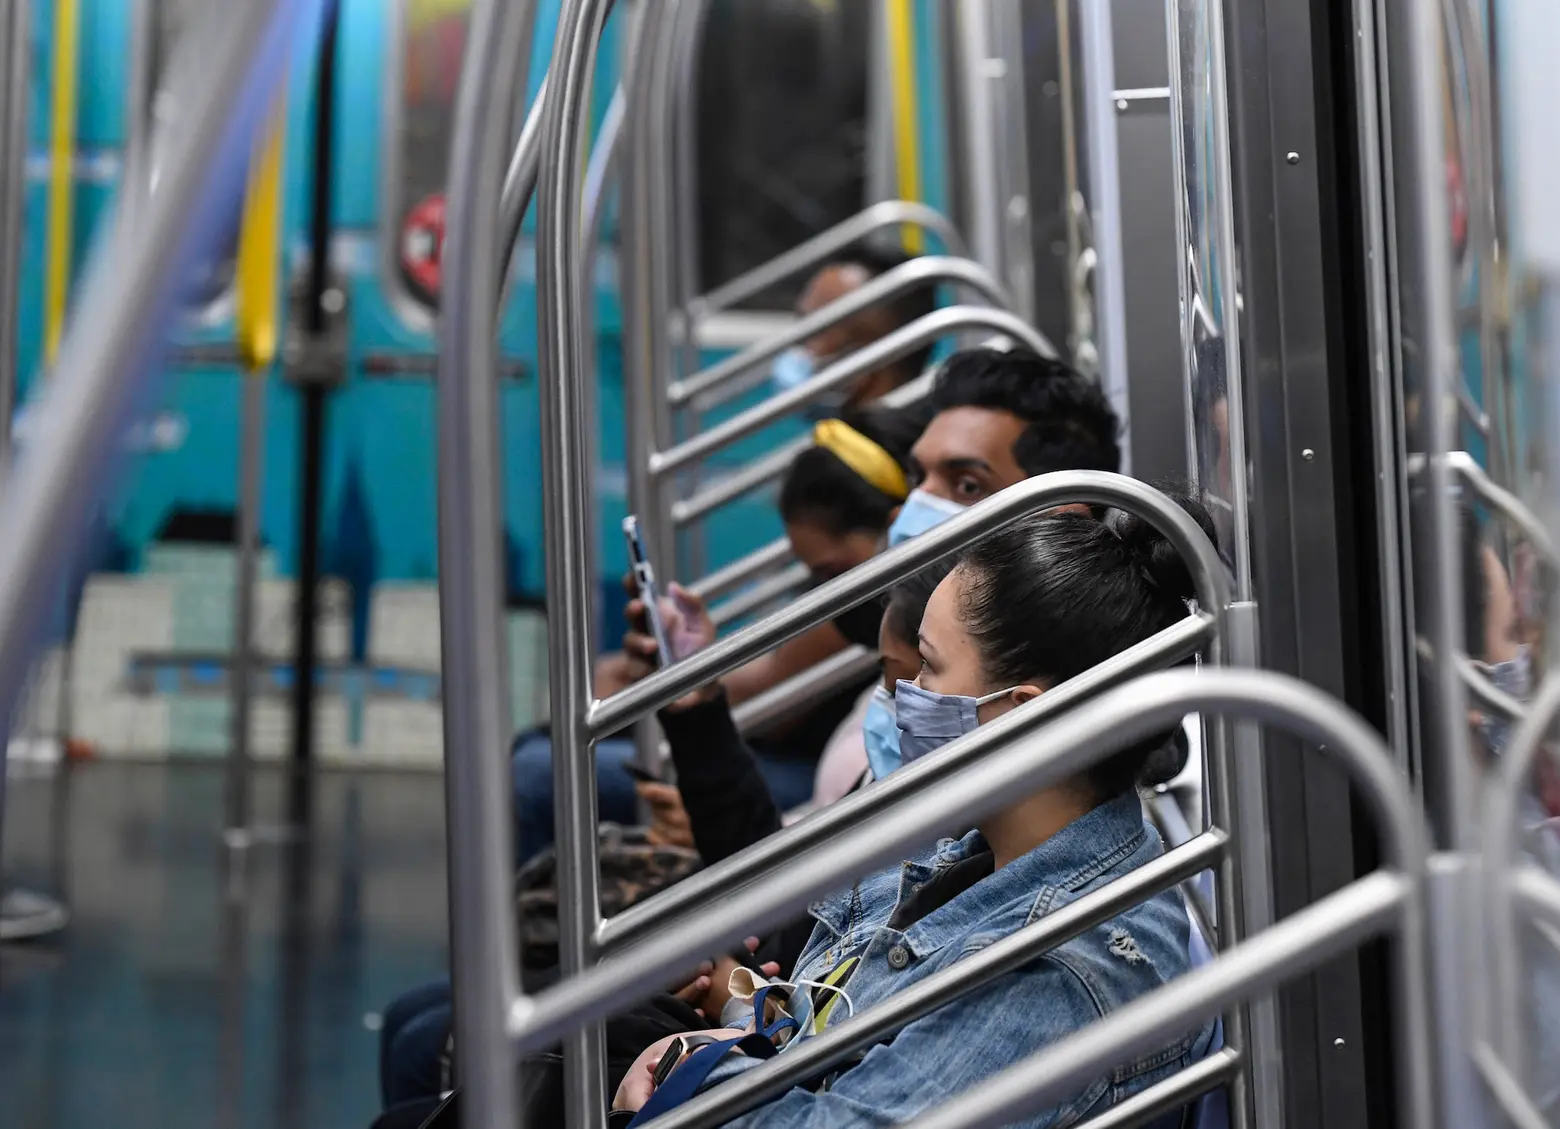 New York lifts mask mandate on public transit